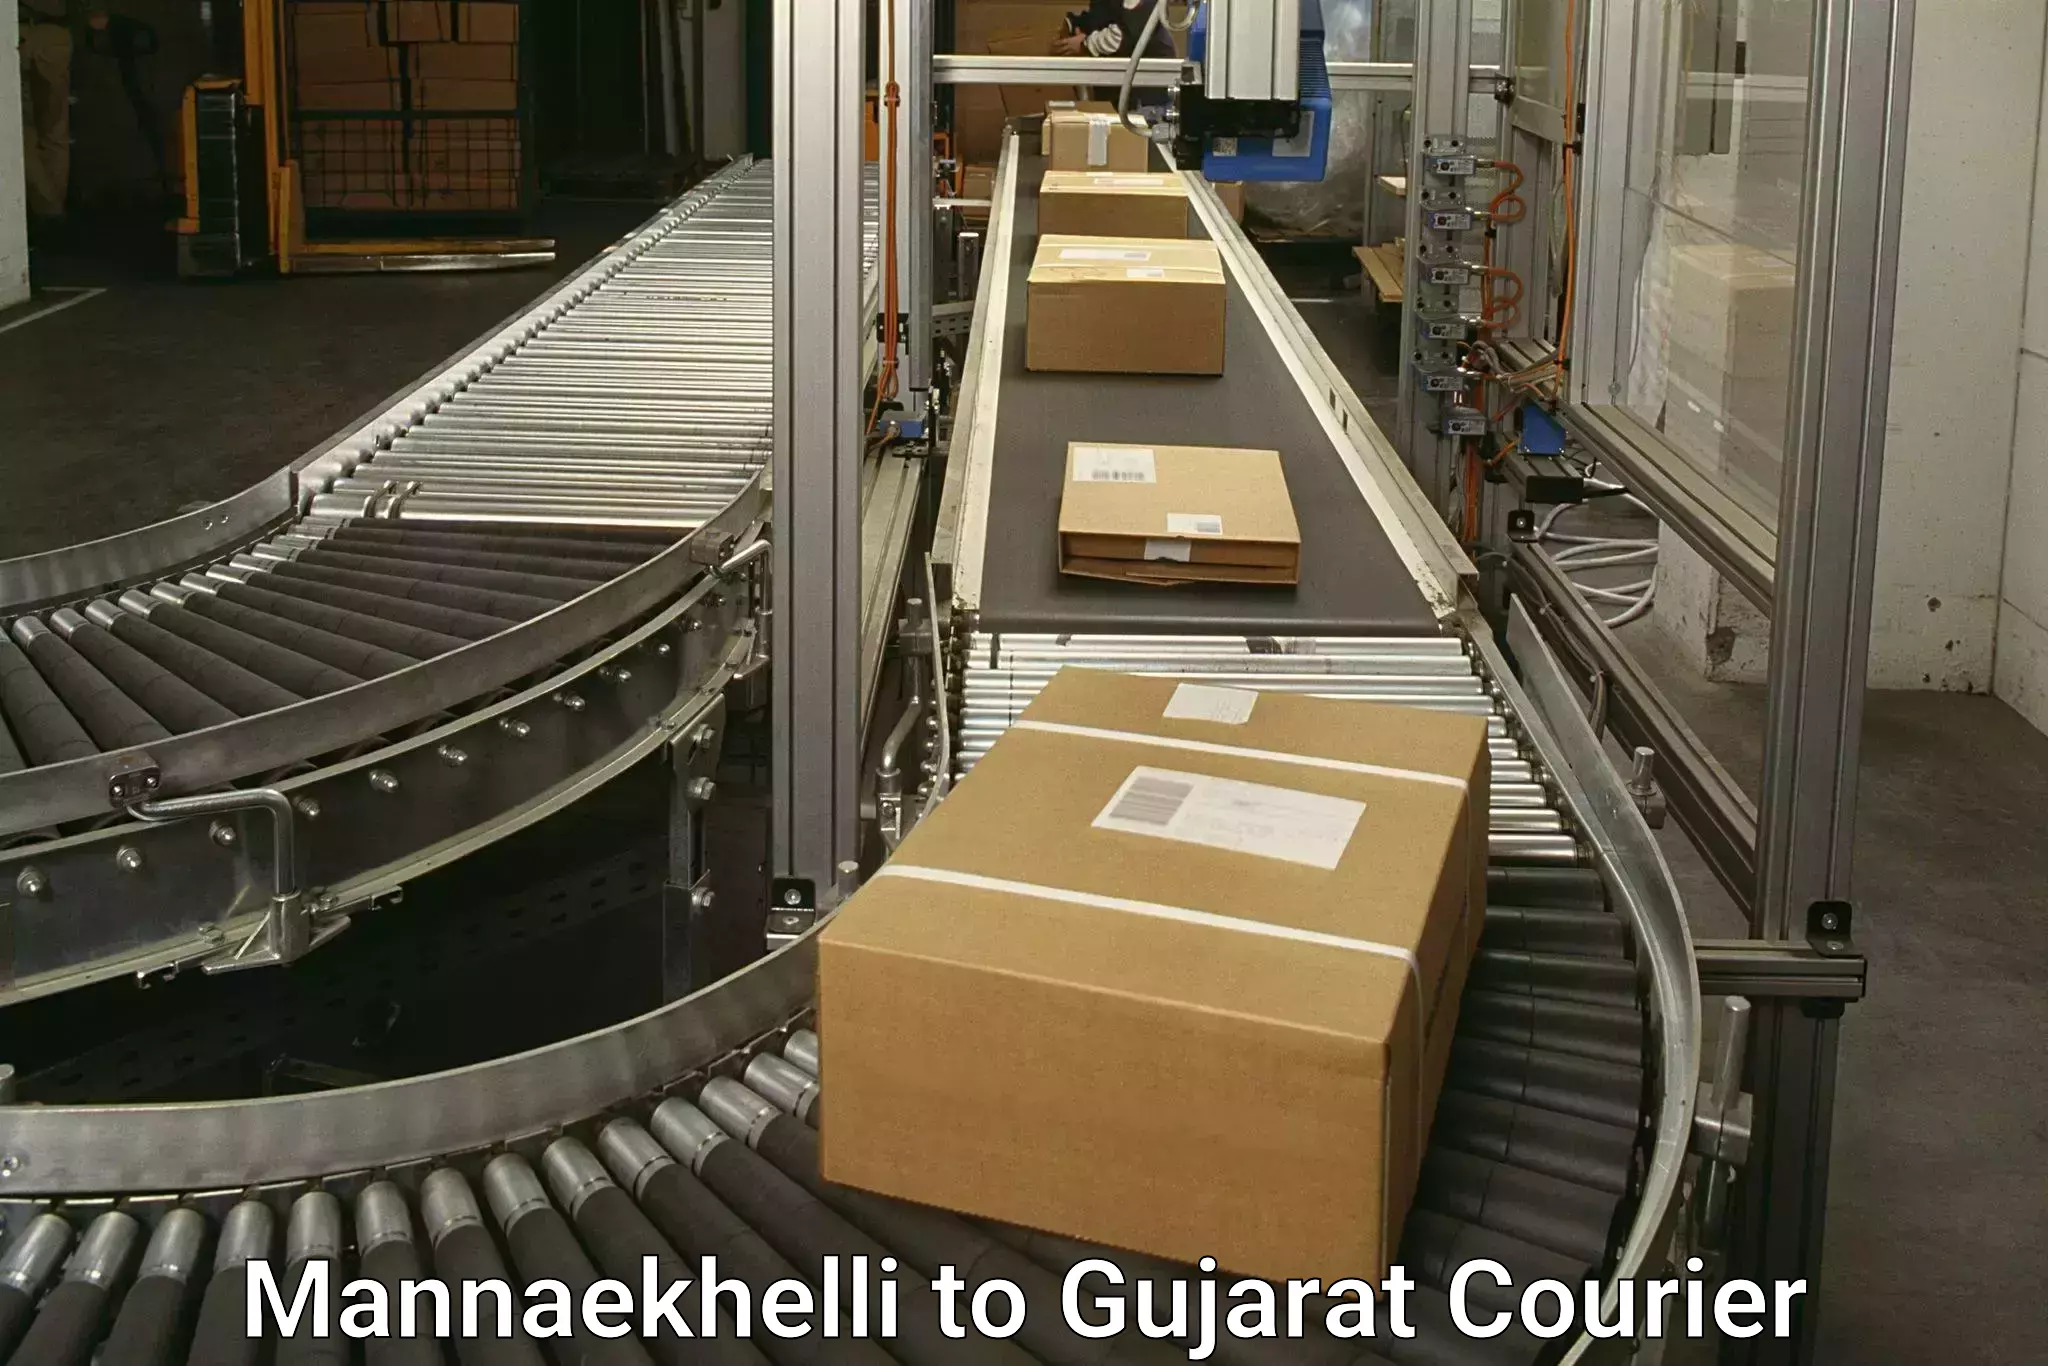 Subscription-based courier Mannaekhelli to Gujarat